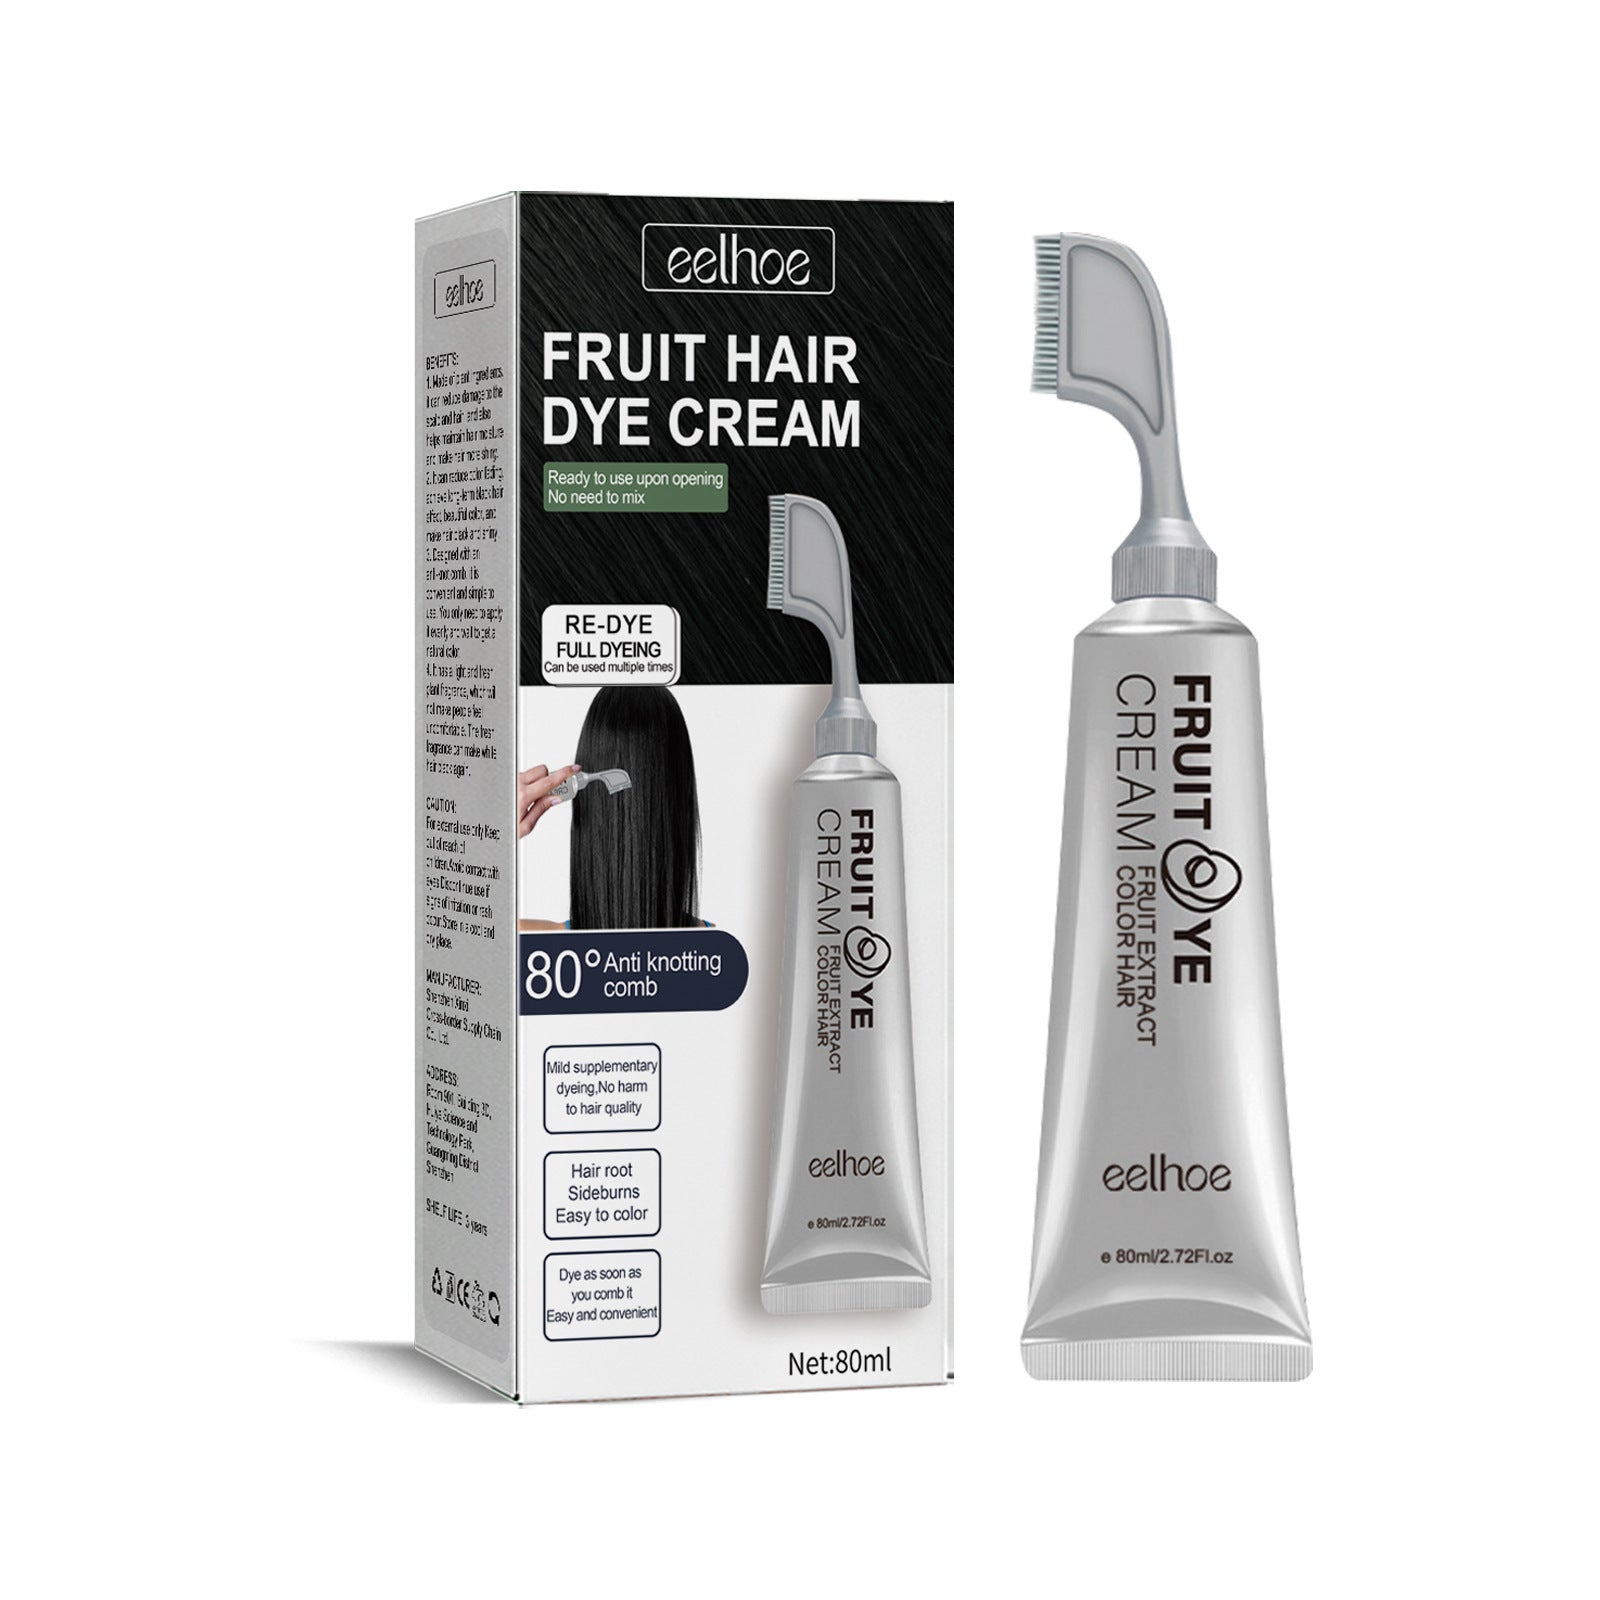 EELHOE Fruit and Vegetable Hair Cream, natural, mild, long-lasting, non-harming scalp, easy-to-color black hair hair cream